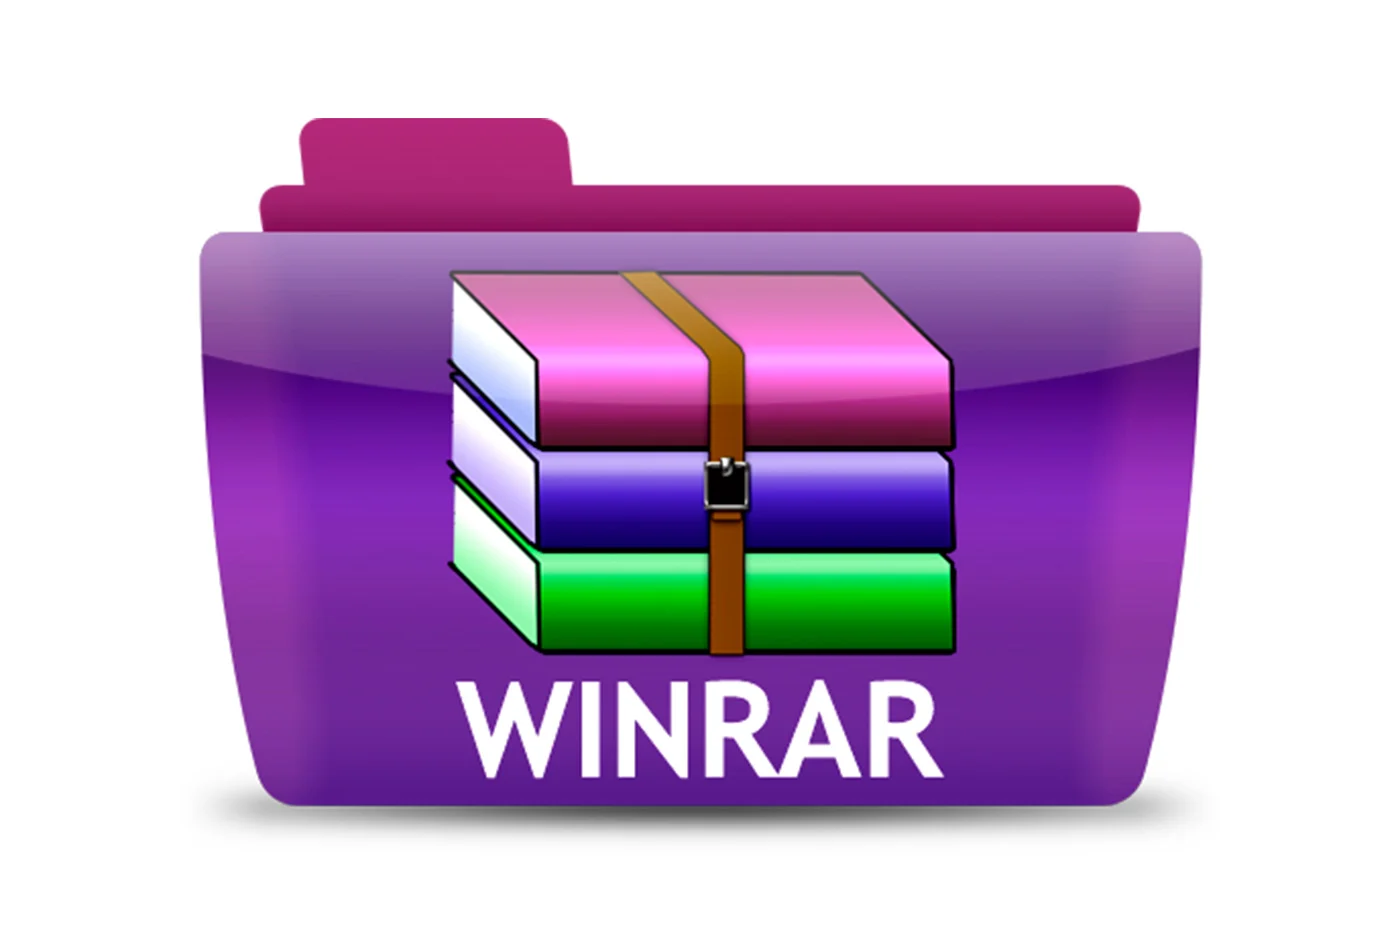 WinRAR Full Crack